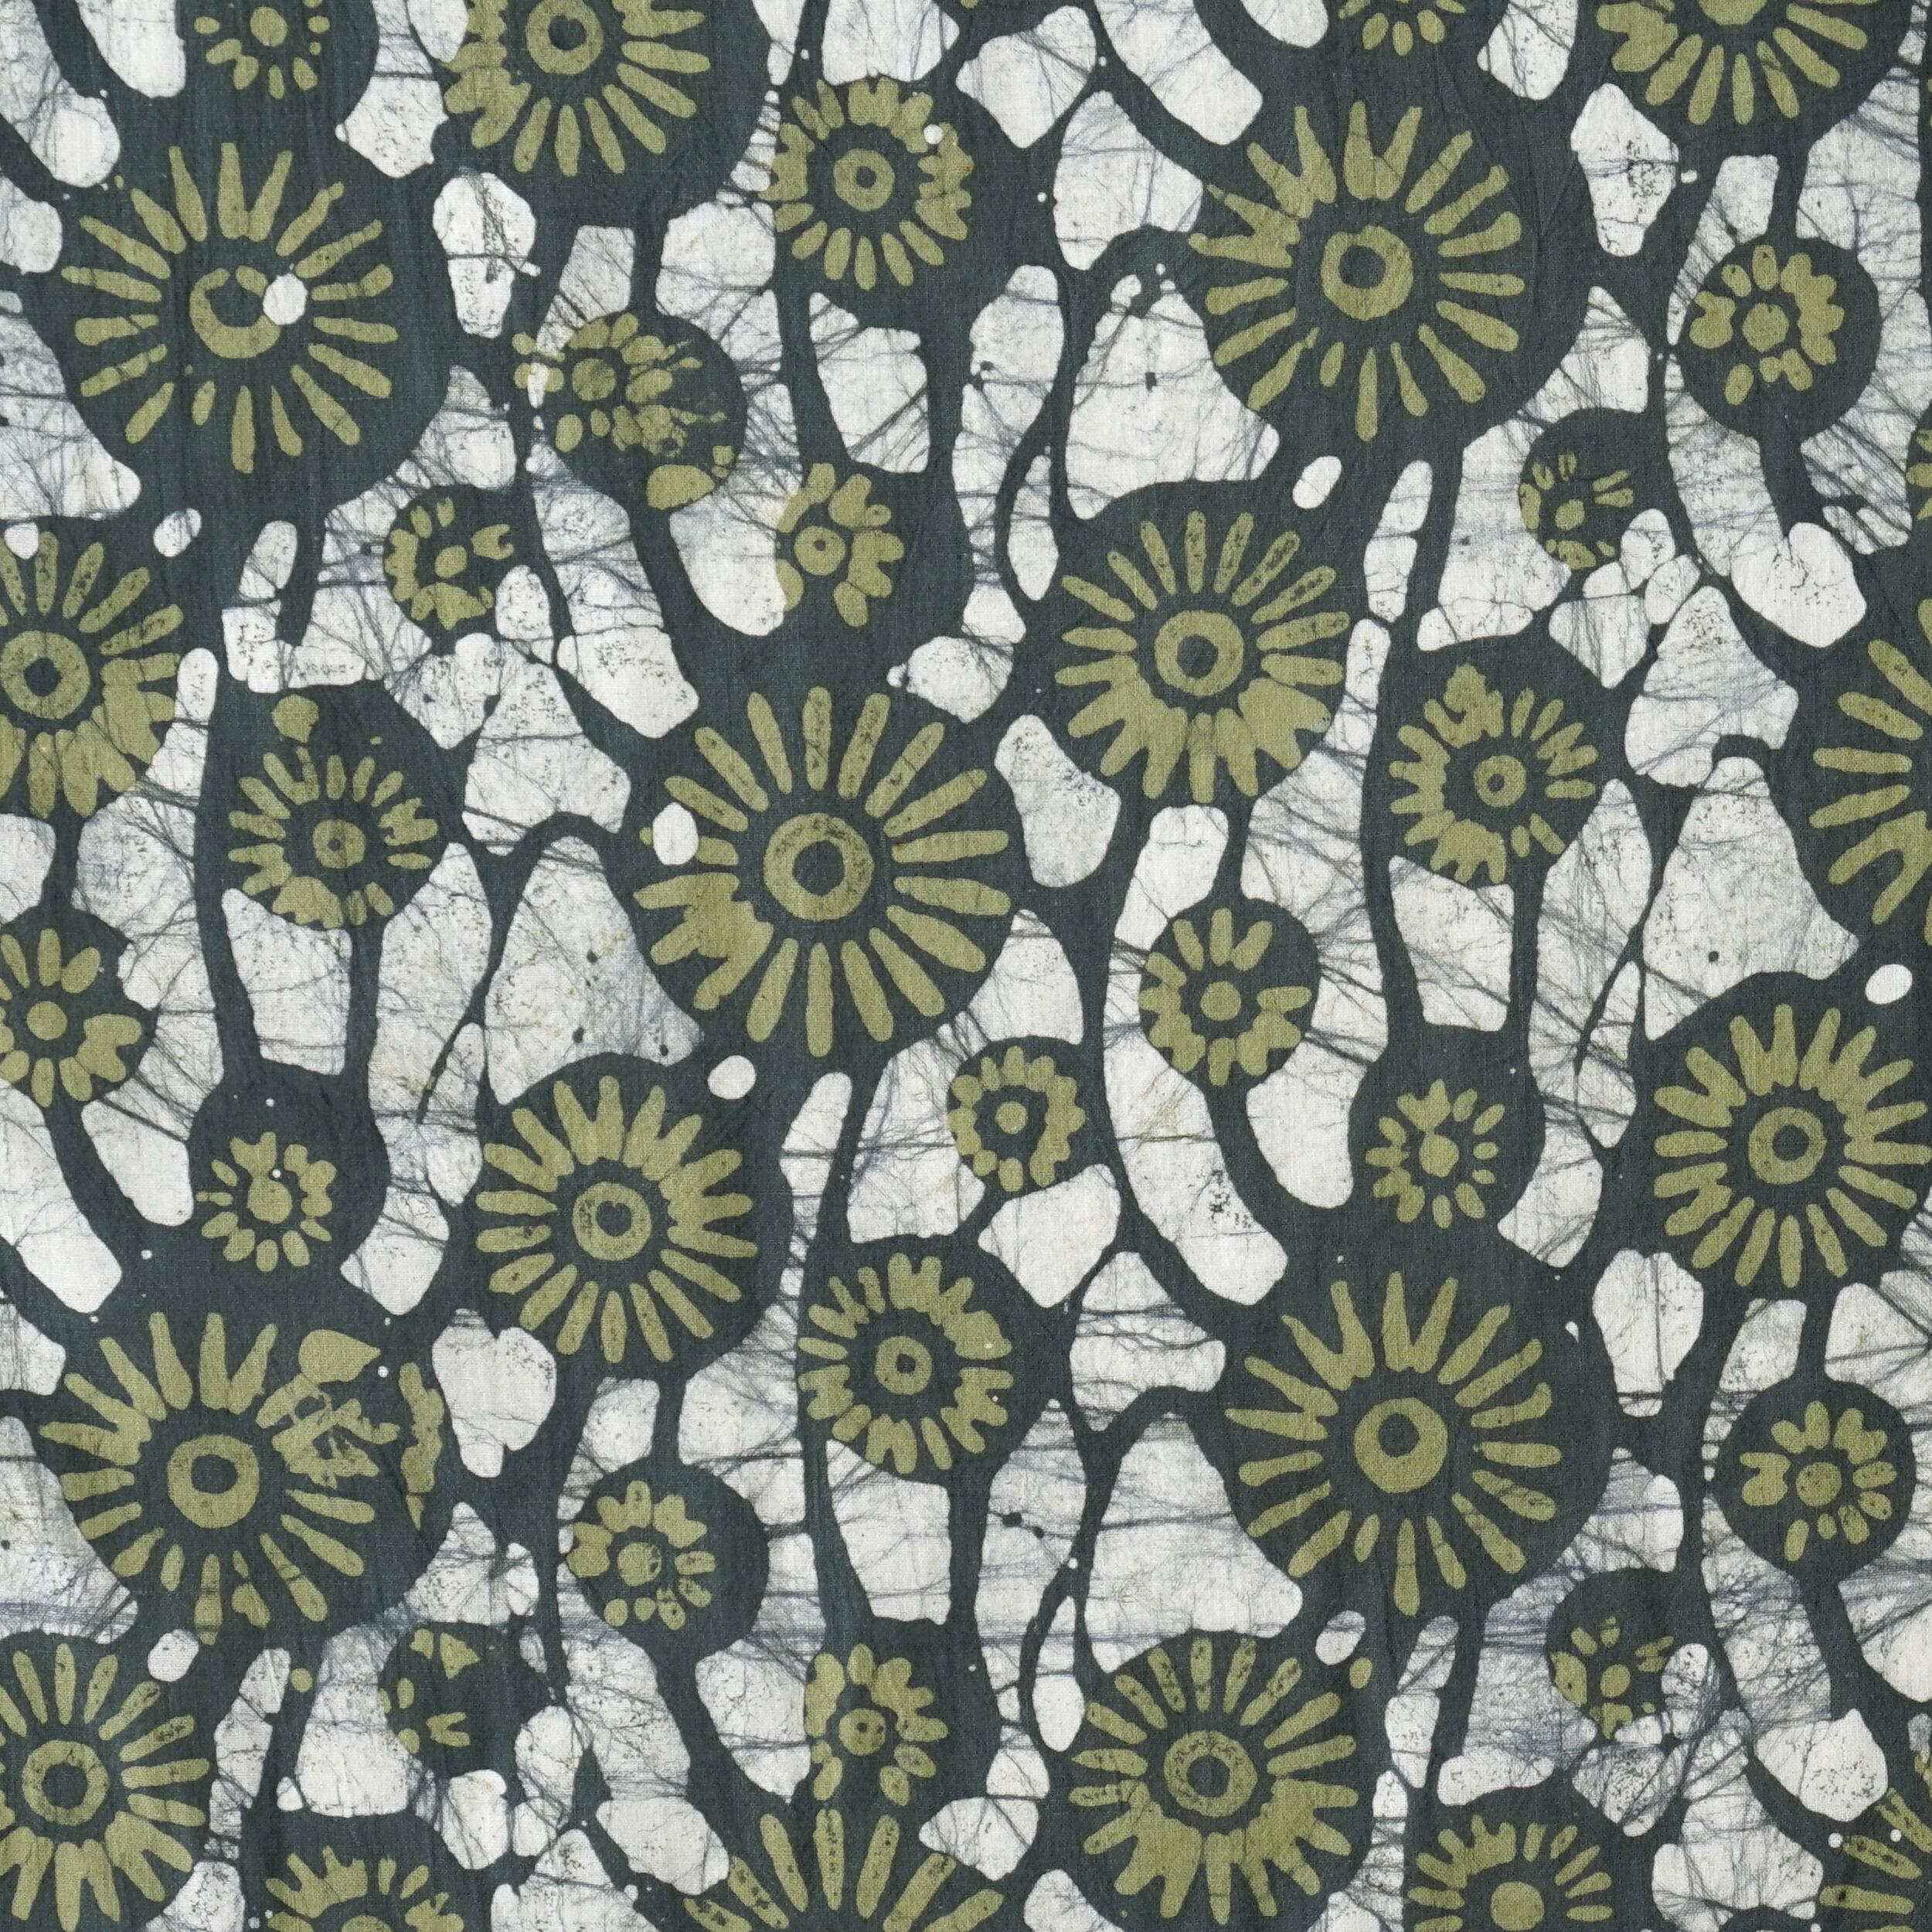 Block-Printed Batik Fabric - Cotton Cloth - Reactive Dyes - Choicest Moss Design - Flat